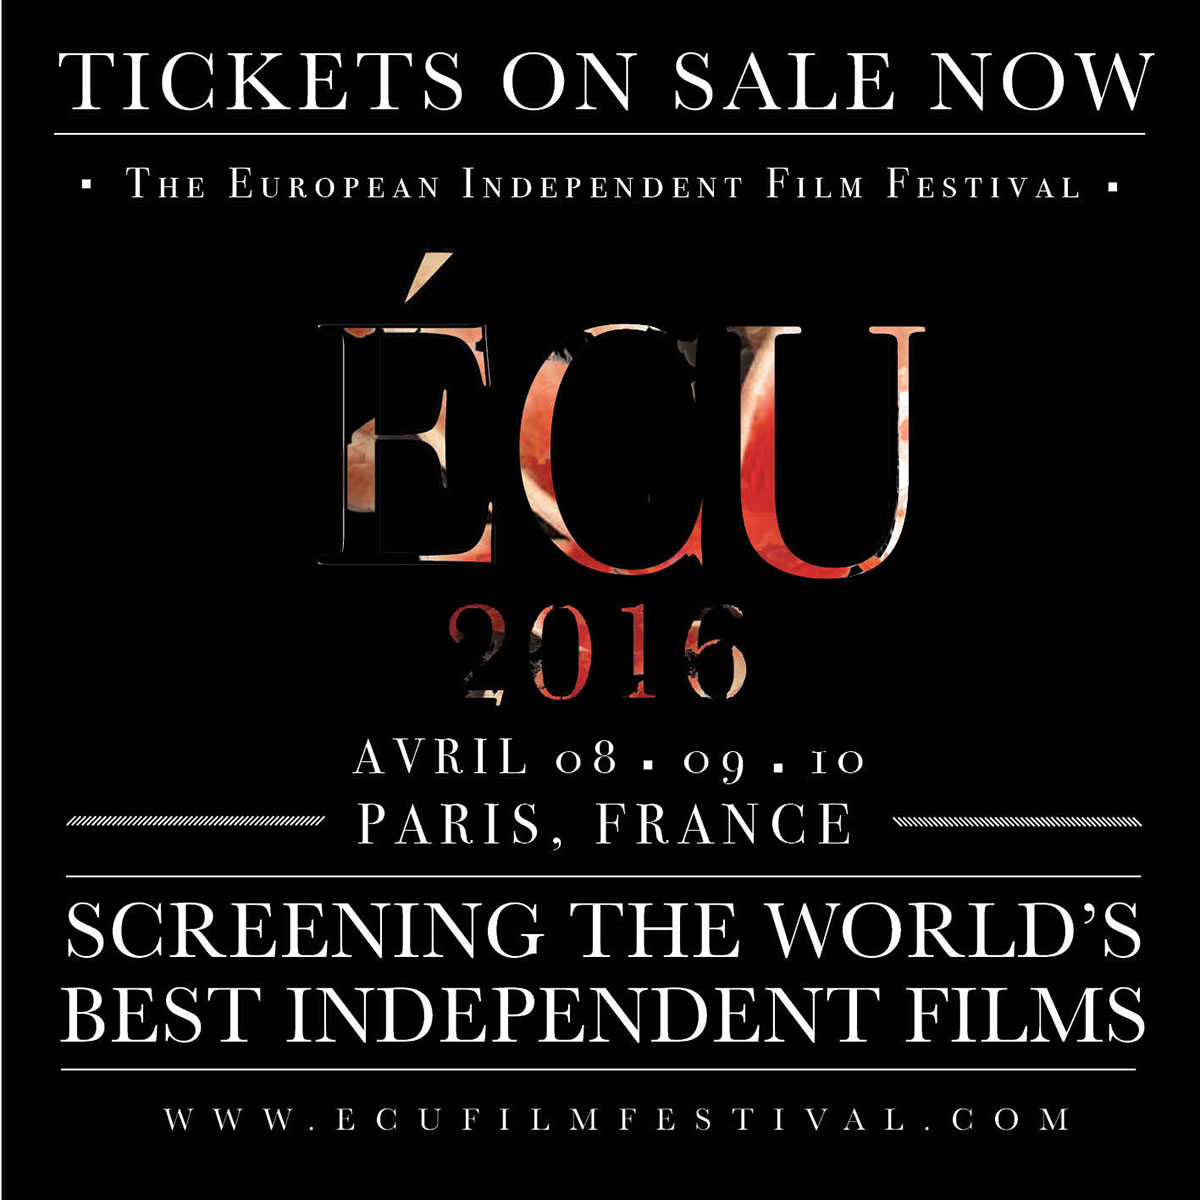 ECU FILM FESTIVAL film festival festival ticket design Poster Design Web Banners web content promotional design film promo film poster